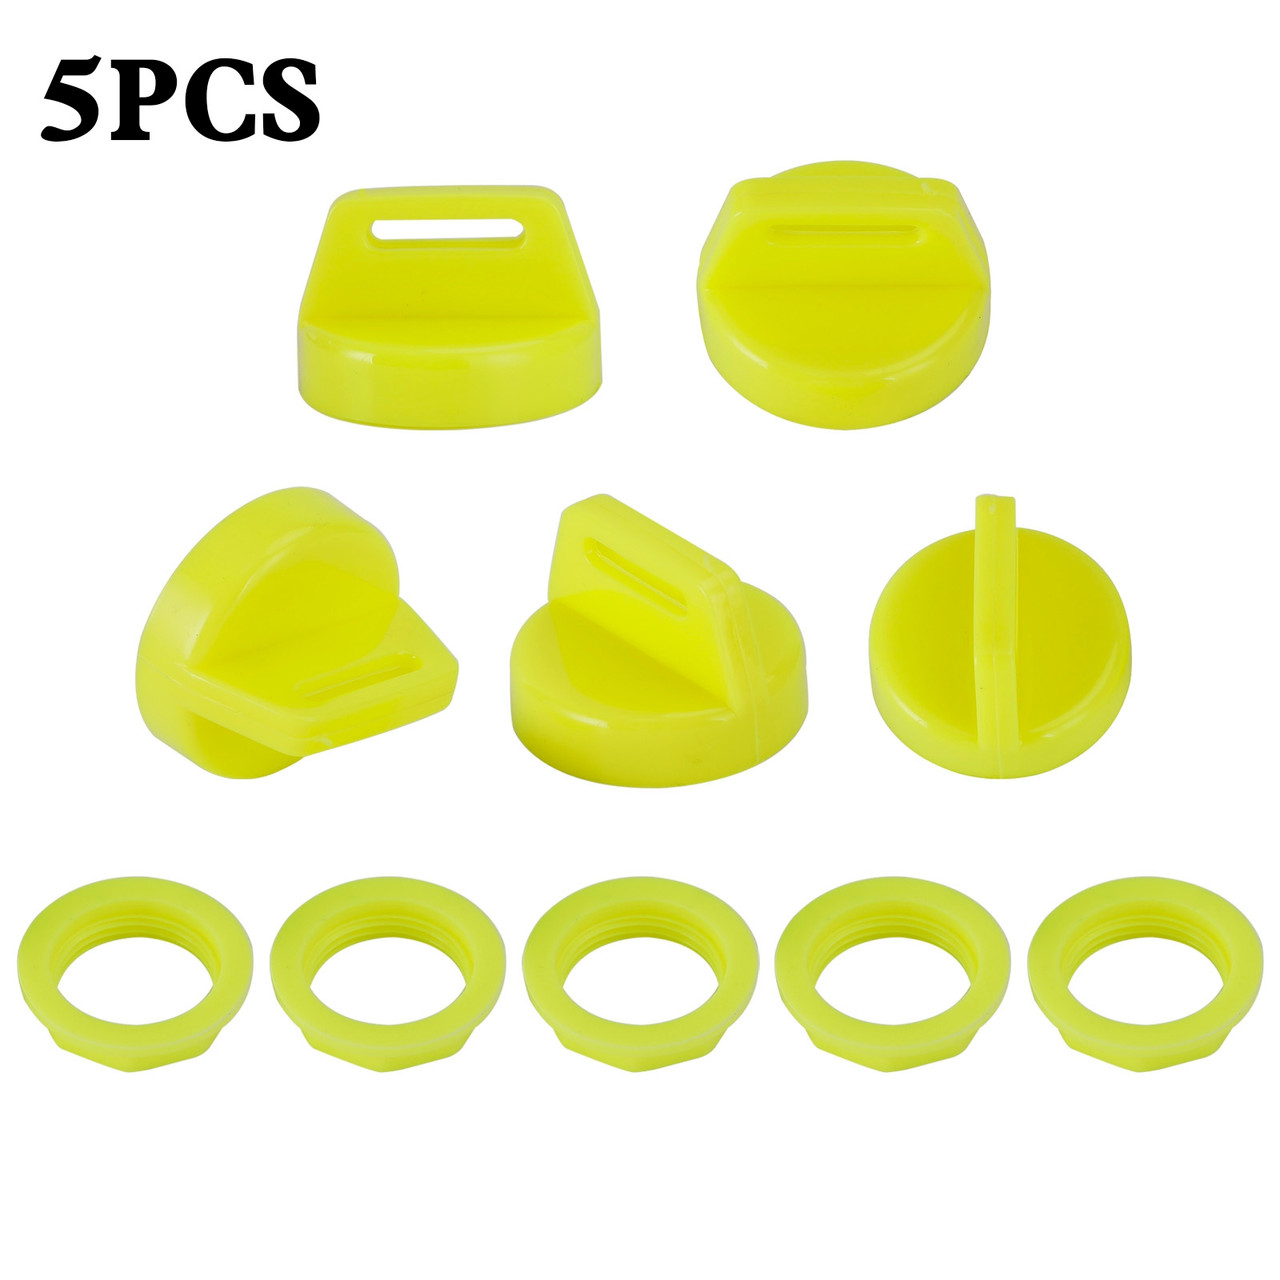 5pcs Key Switch Cover Yellow For Polaris Ranger 400 500 570 800 900 1000 5433534